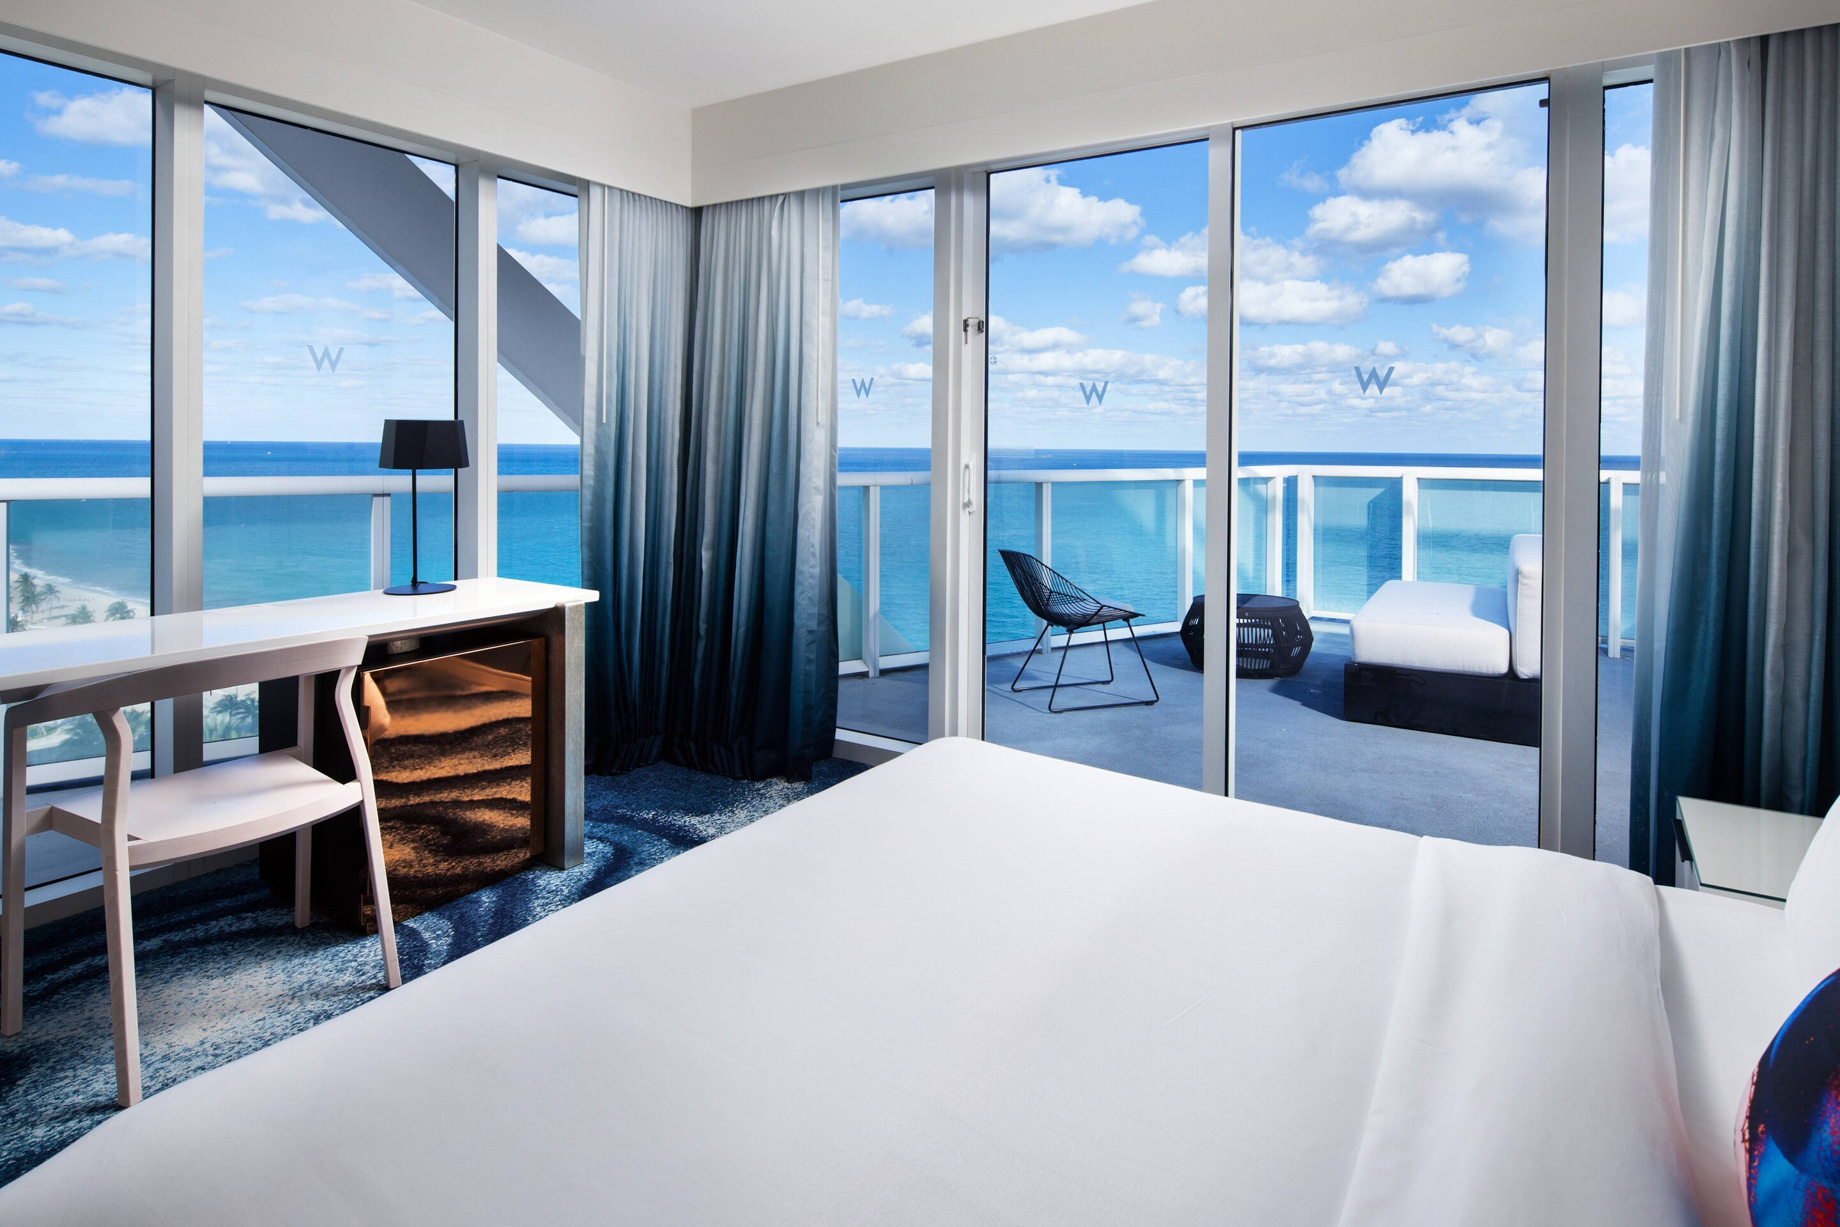 W Fort Lauderdale Hotel – Fort Lauderdale, FL, USA – Oasis Ocean Front Suite